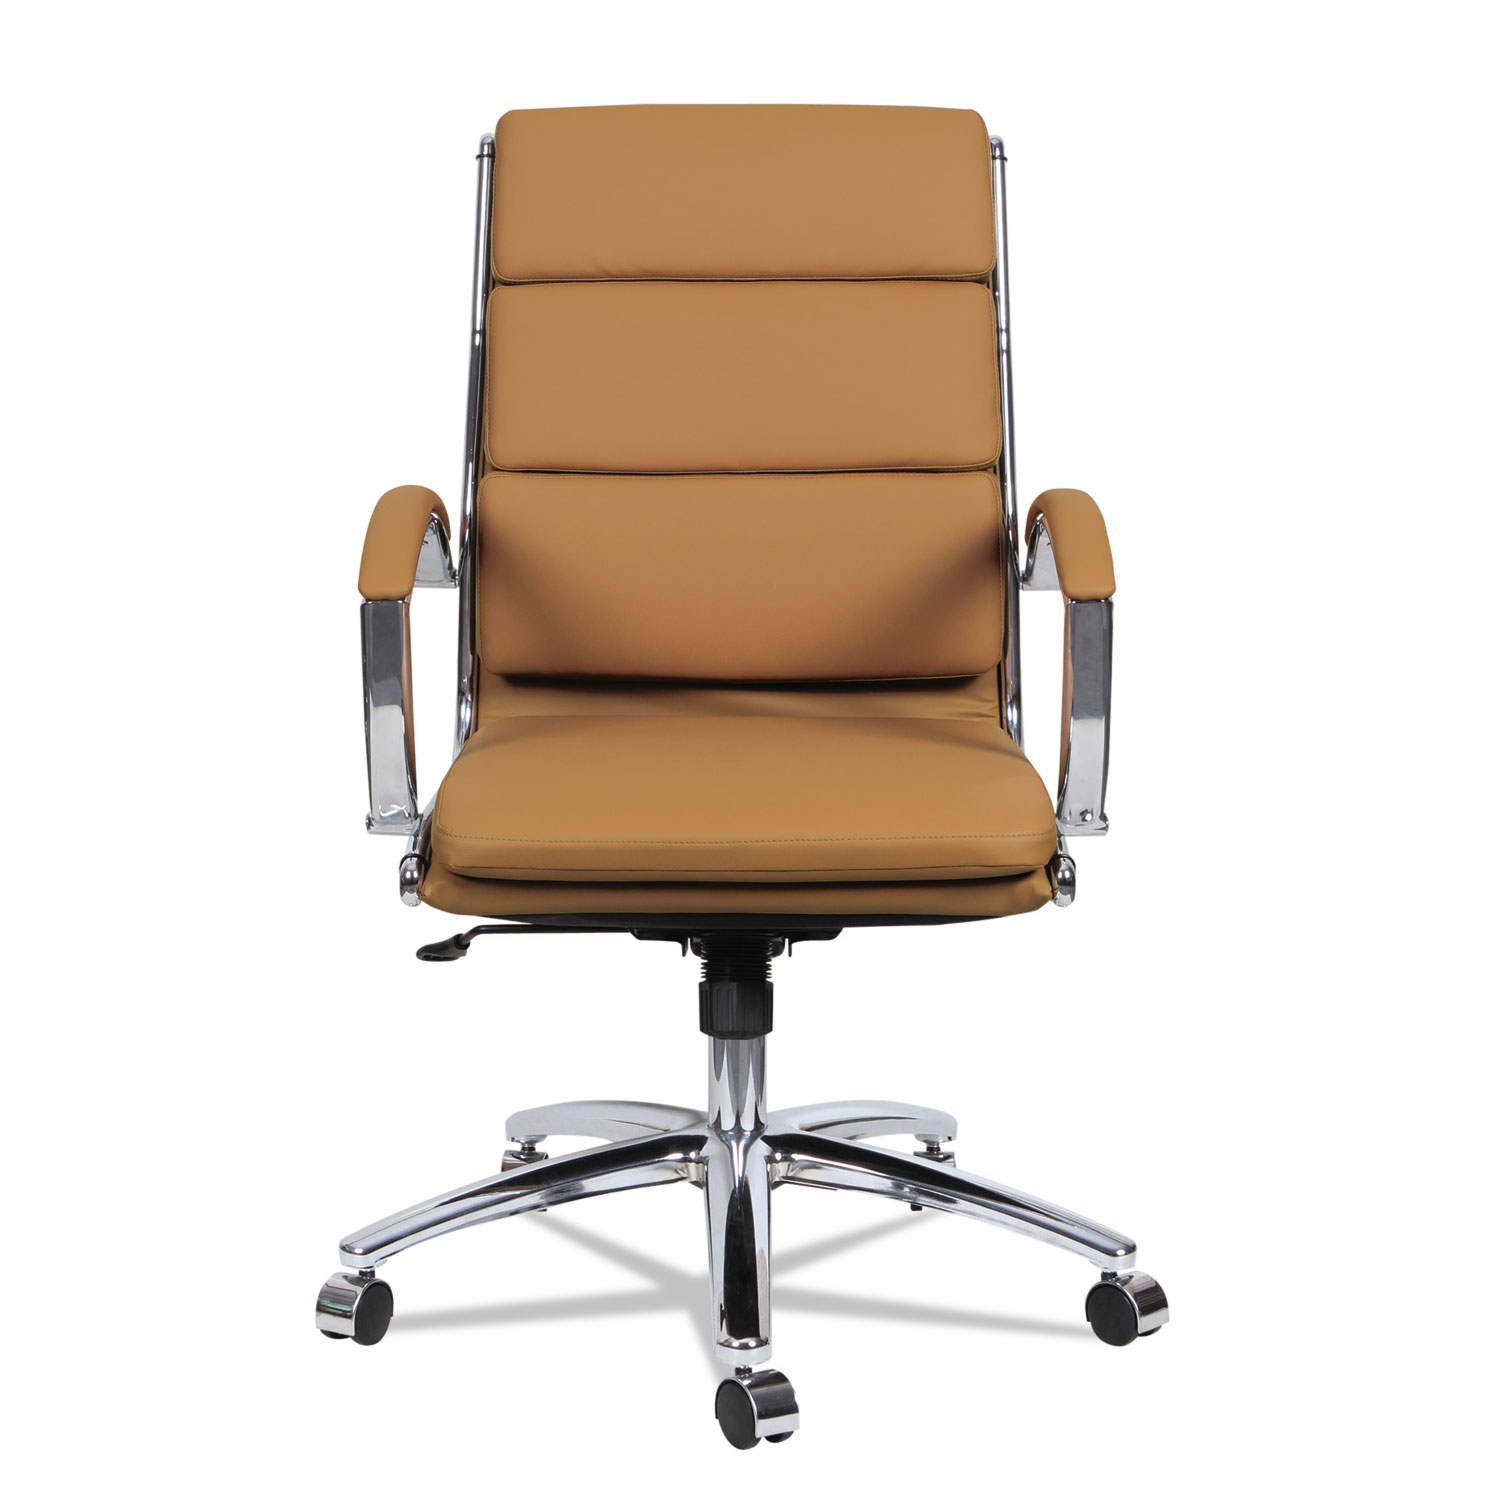 Alera Neratoli Mid-Back Slim Profile Chair, Camel Soft Leather, Chrome Frame